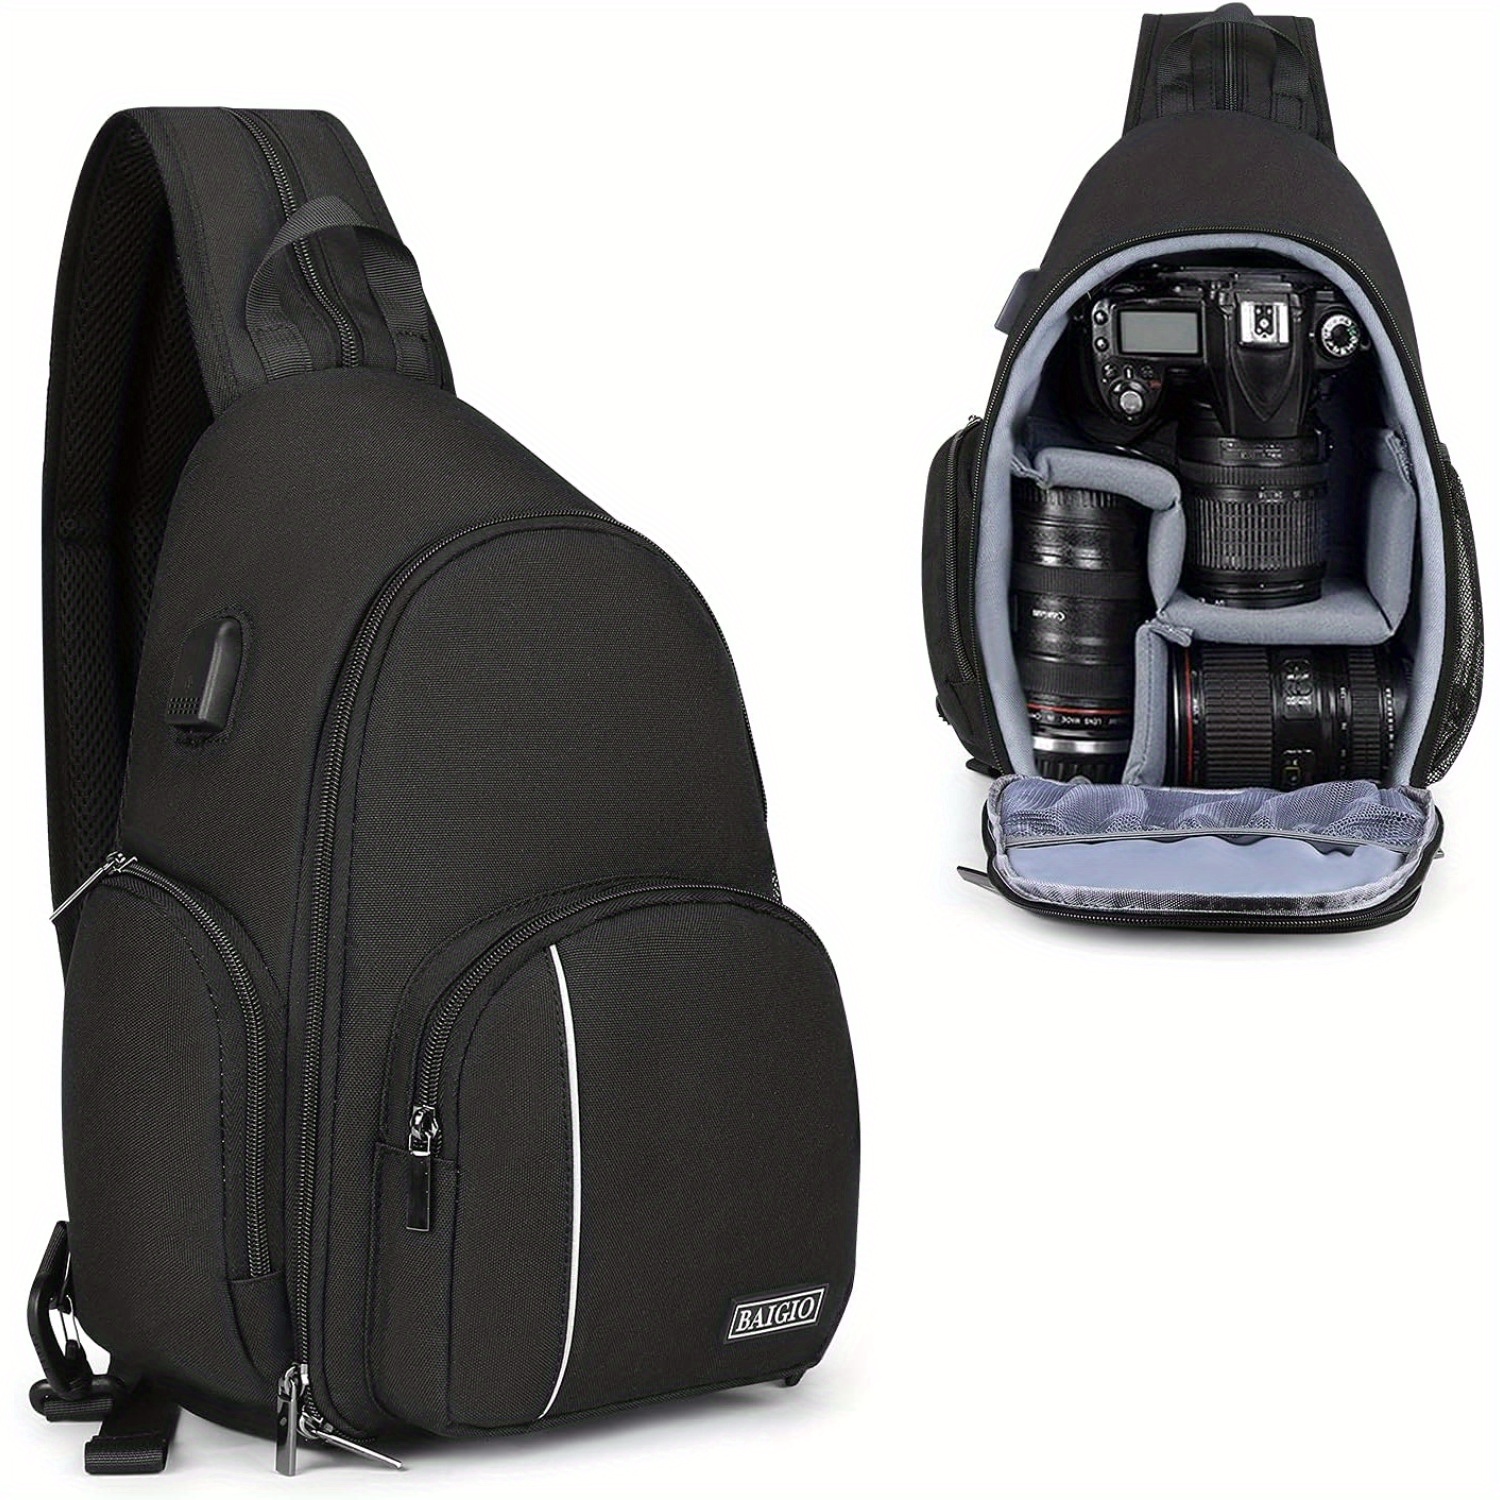 

Camera Sling Backpack Camera Bag For Dslr Slr Mirrorless Camera, Water-resistance Camera Shoulder Crossbody Case Compatible With ///fuji (black)